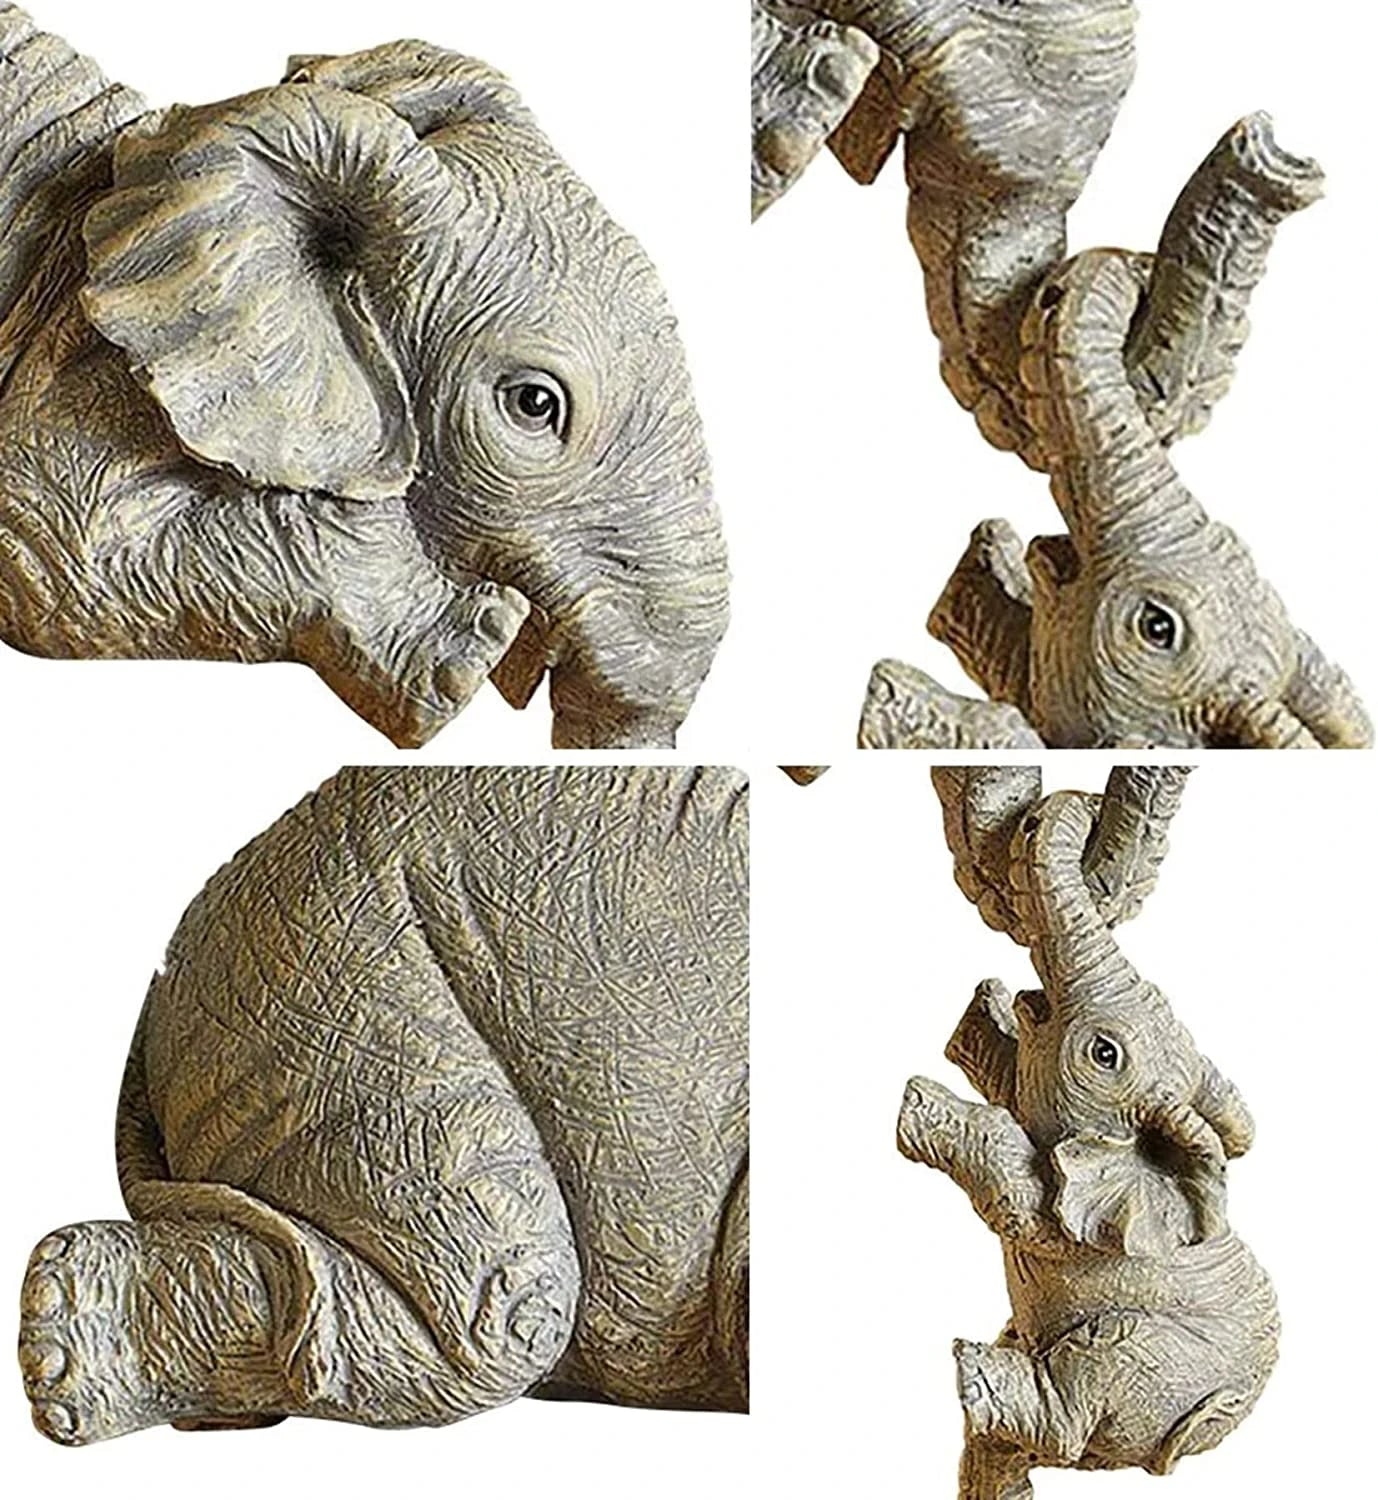 Elephant Family Simulation Figurines